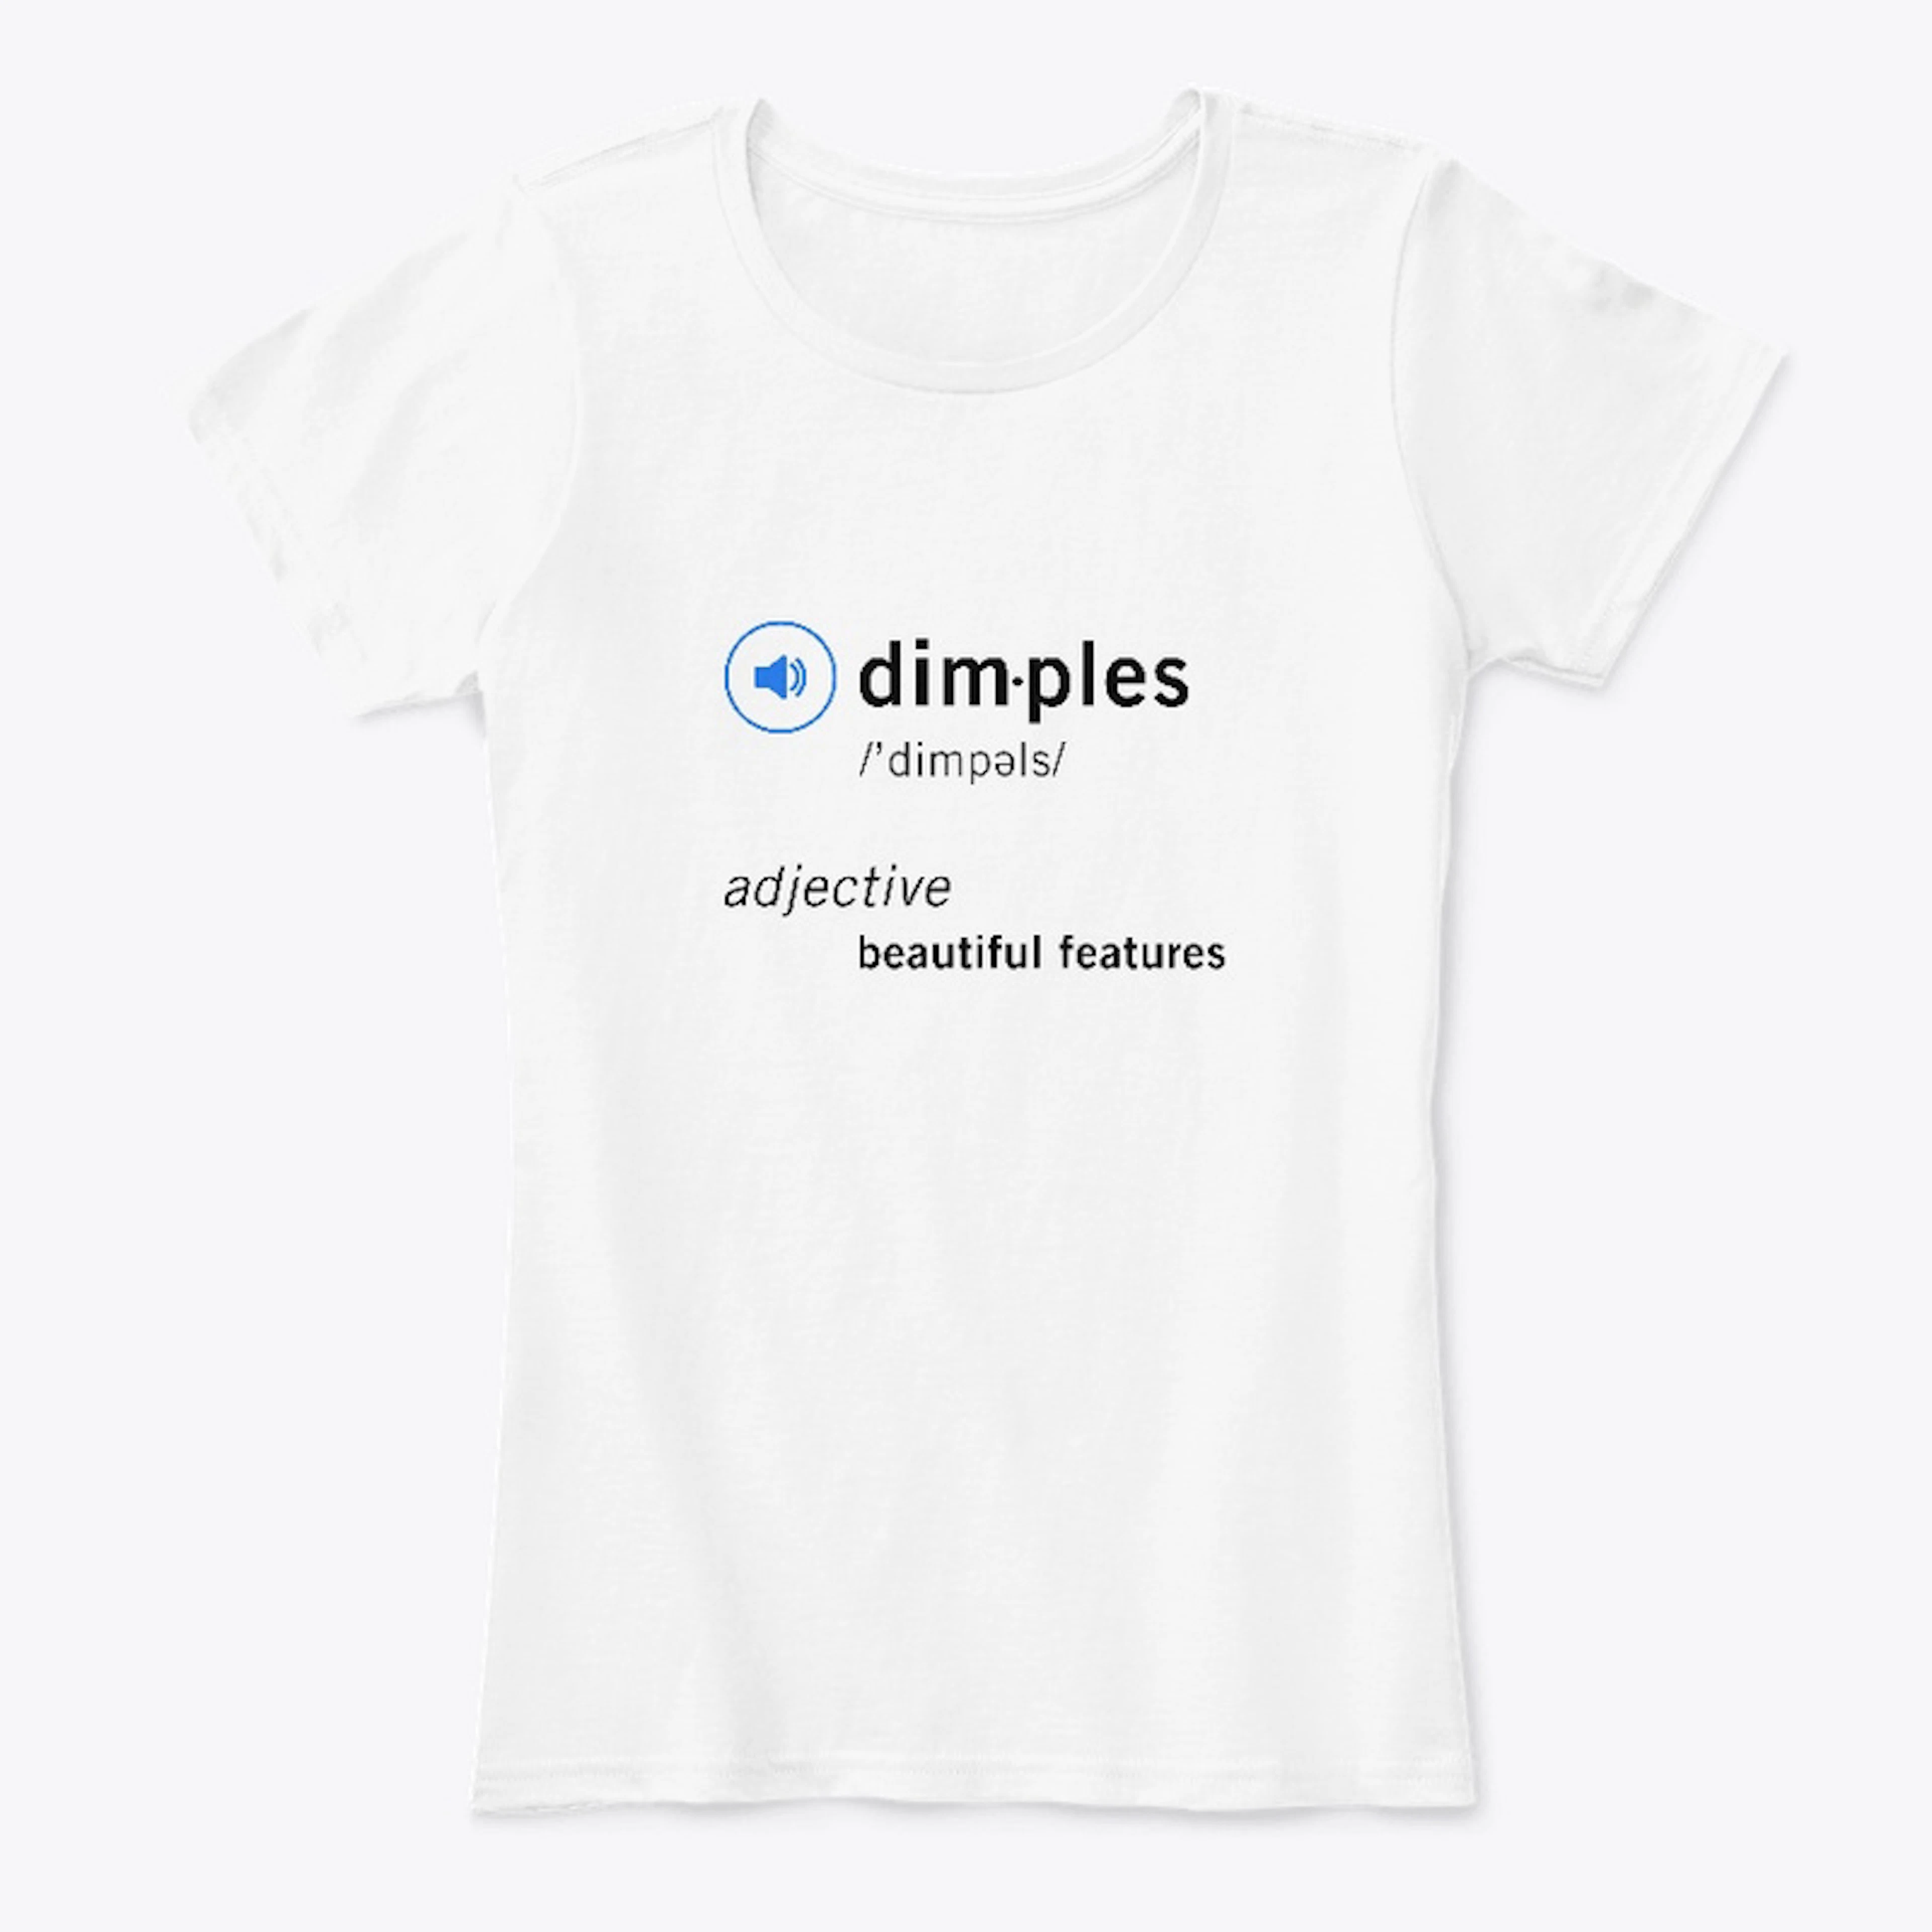 Dimples definition